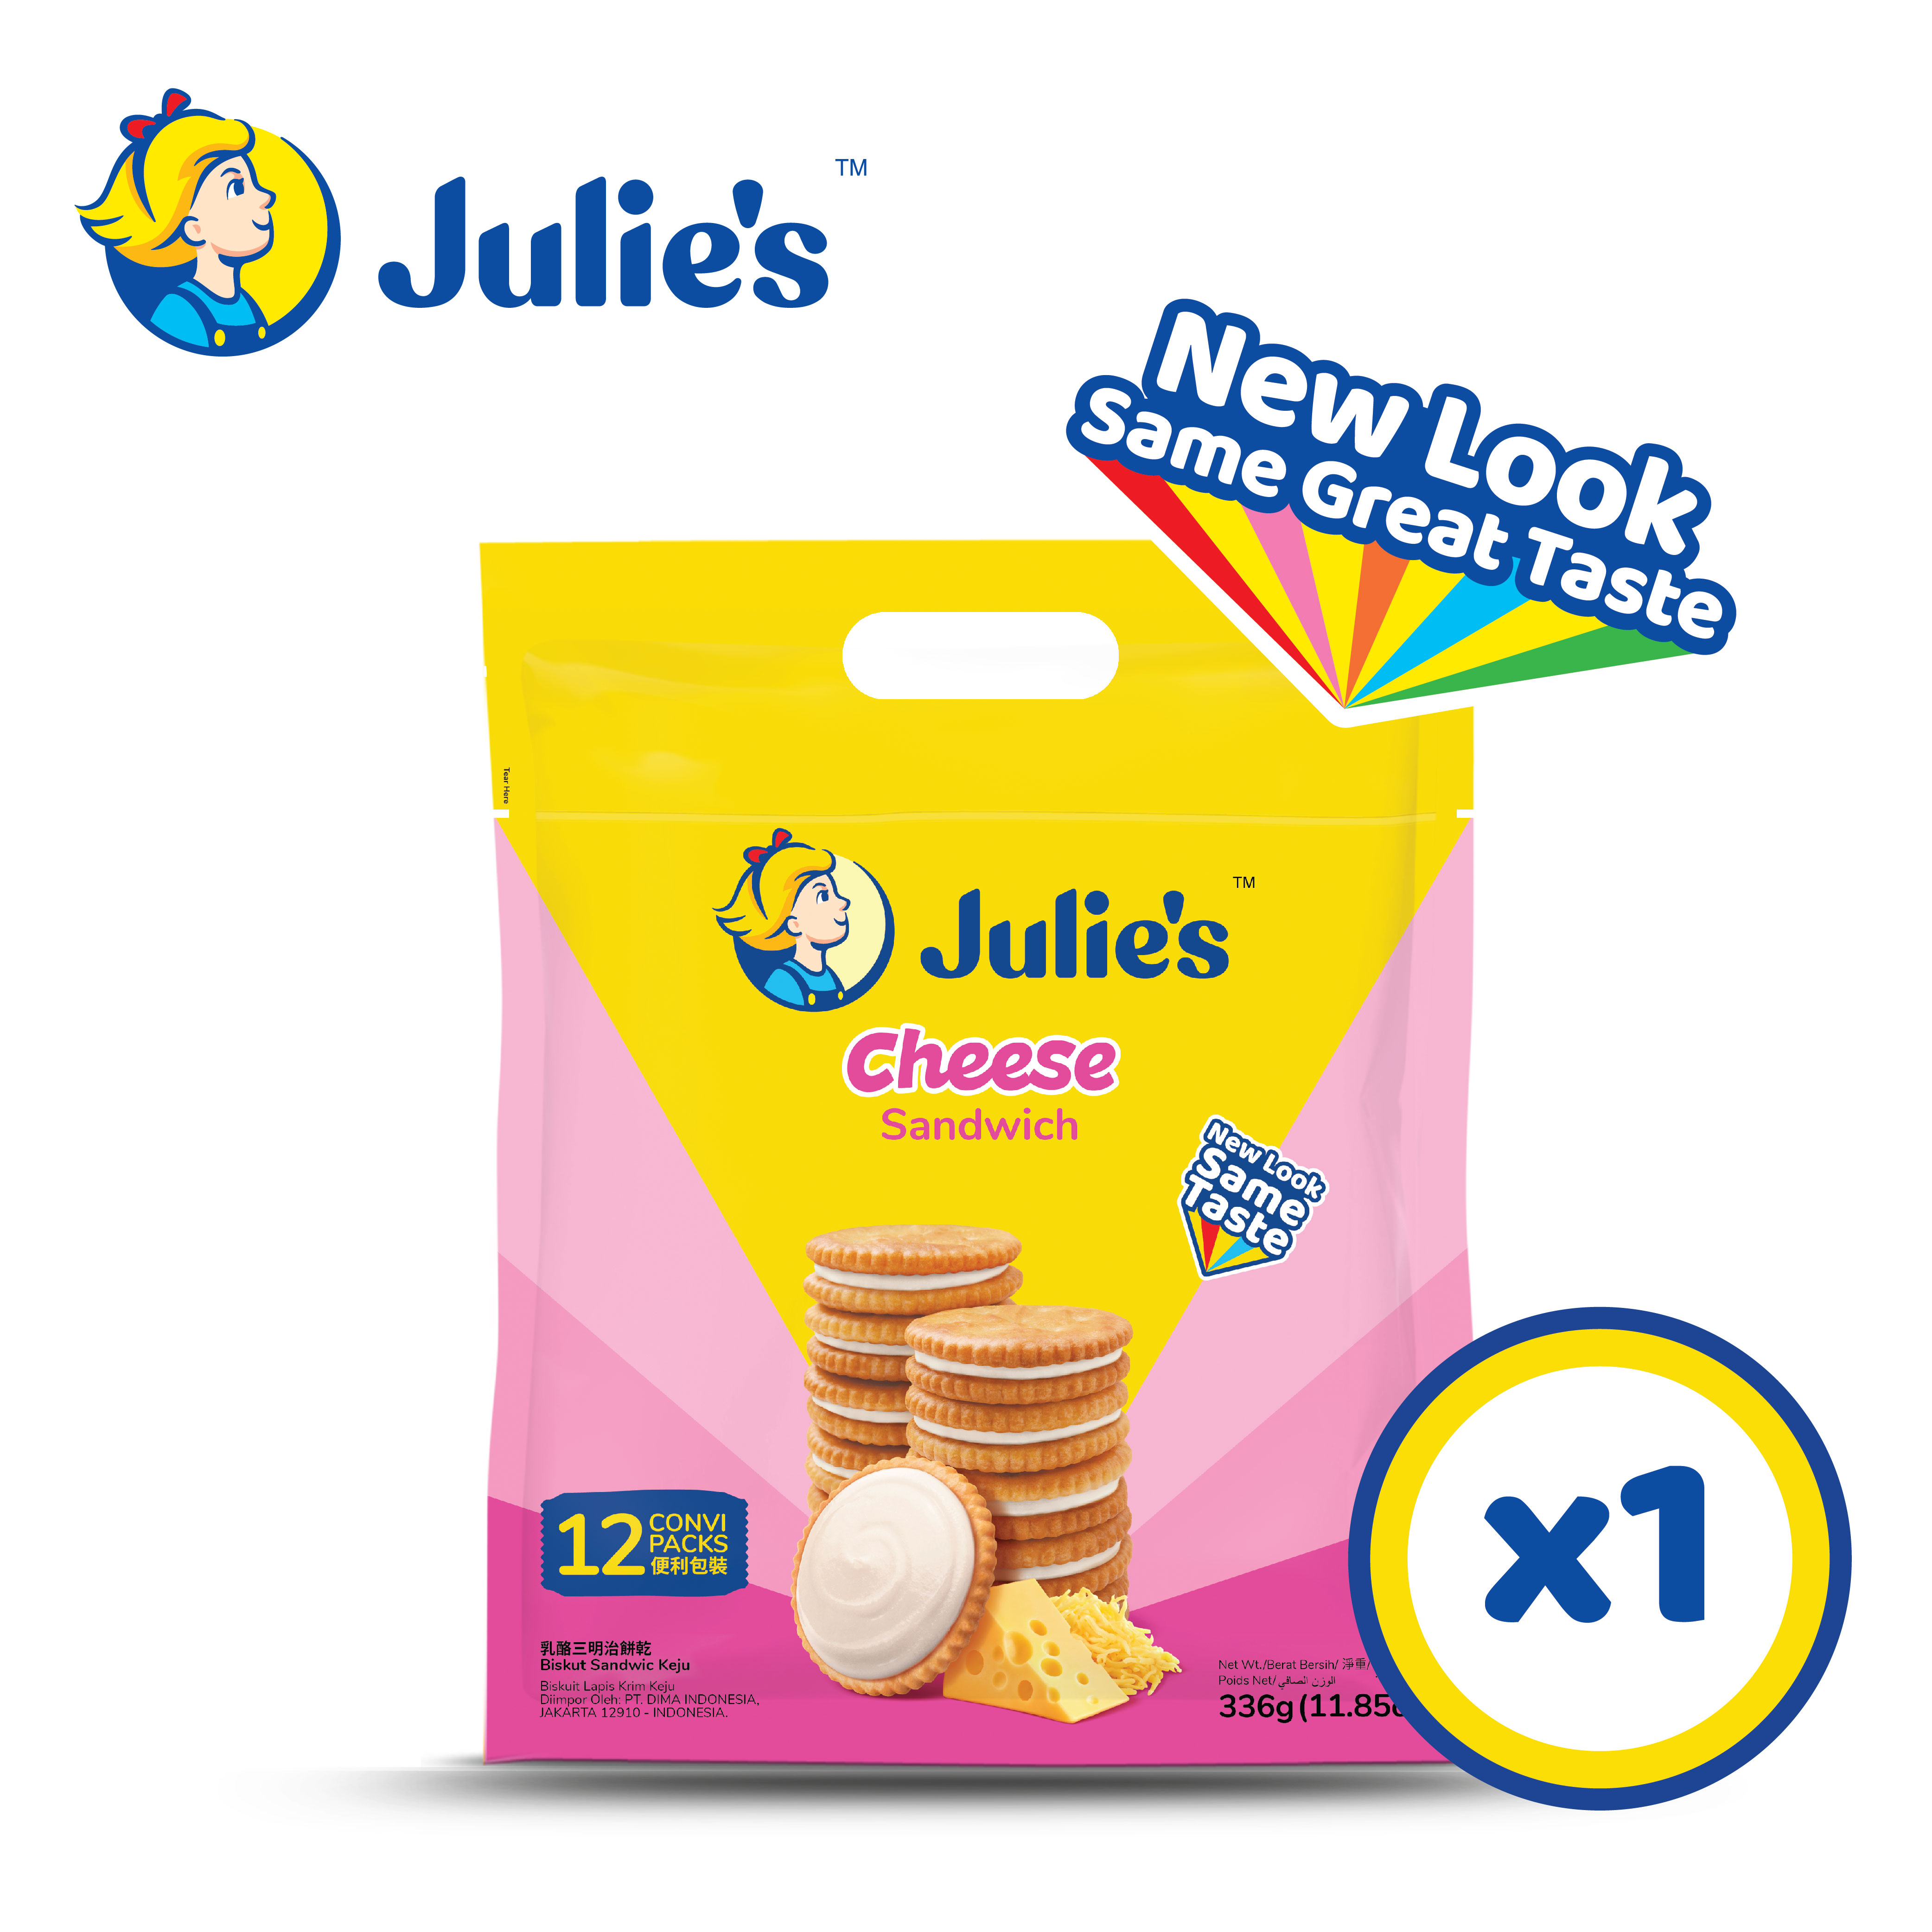 Julie’s Cheese Sandwich 336g x 1 pack